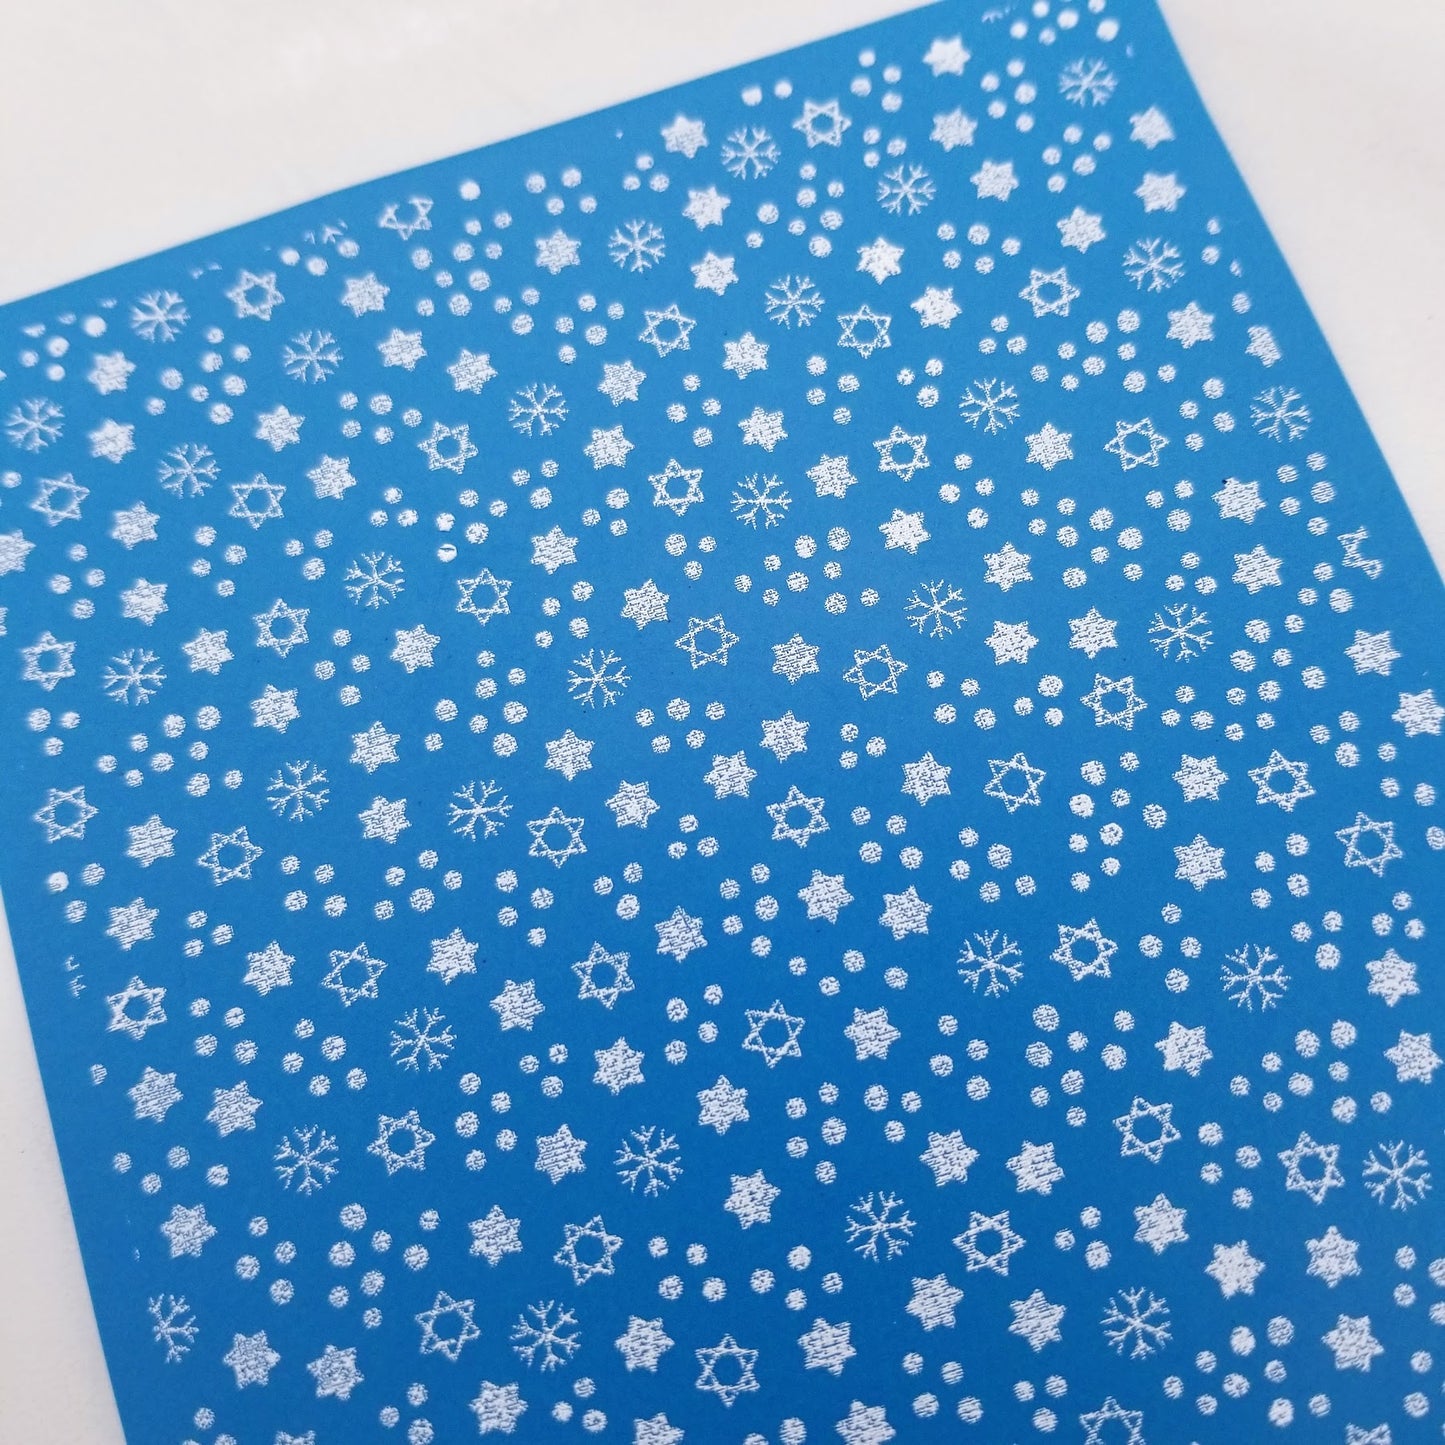 Hanukkah Star of David Design Details Polymer Clay Silkscreen Stencils